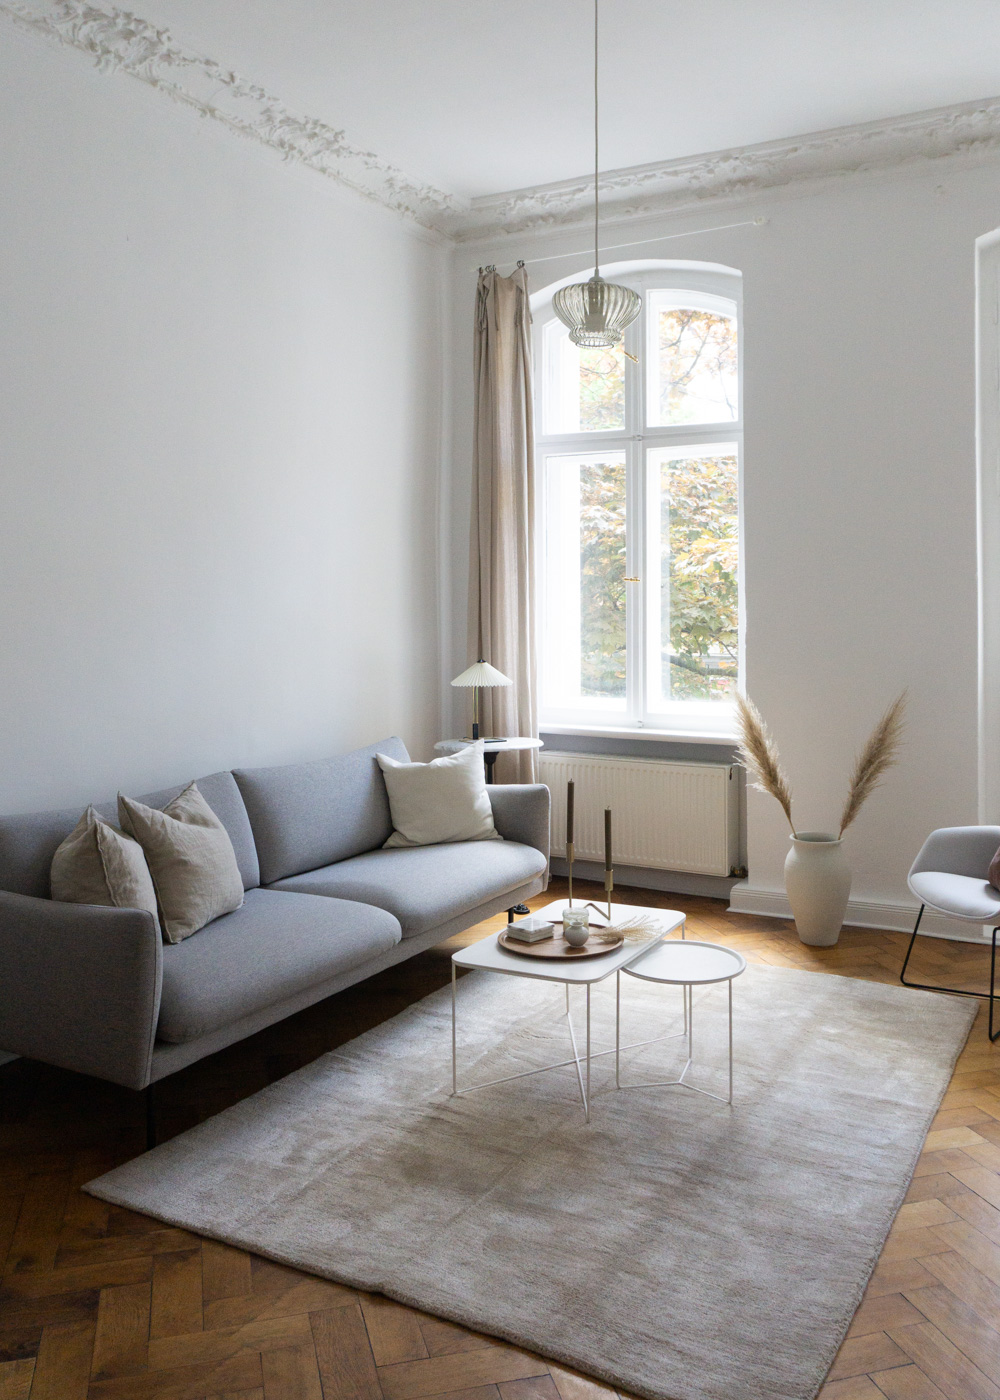 Grey Sofa, Toupe Rug, White Living Room, Wood Floors - Neutral Home, Scandinavian Aesthetic, Berlin Apartment, White Interior, Calm Lighting | RG Daily Blog